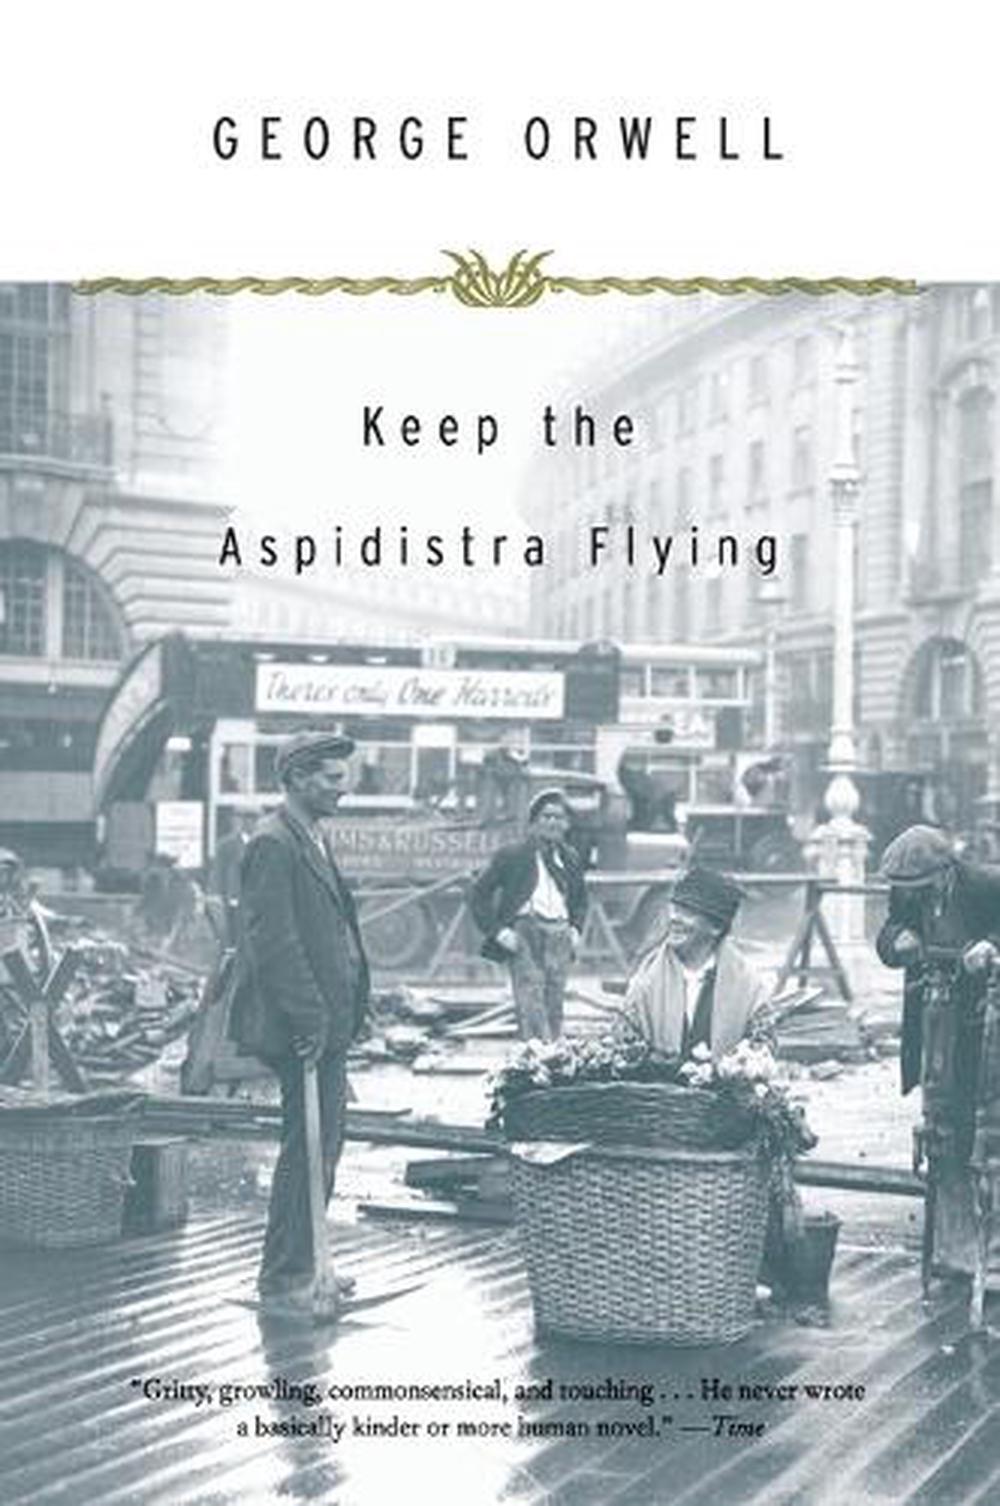 let the aspidistra flying